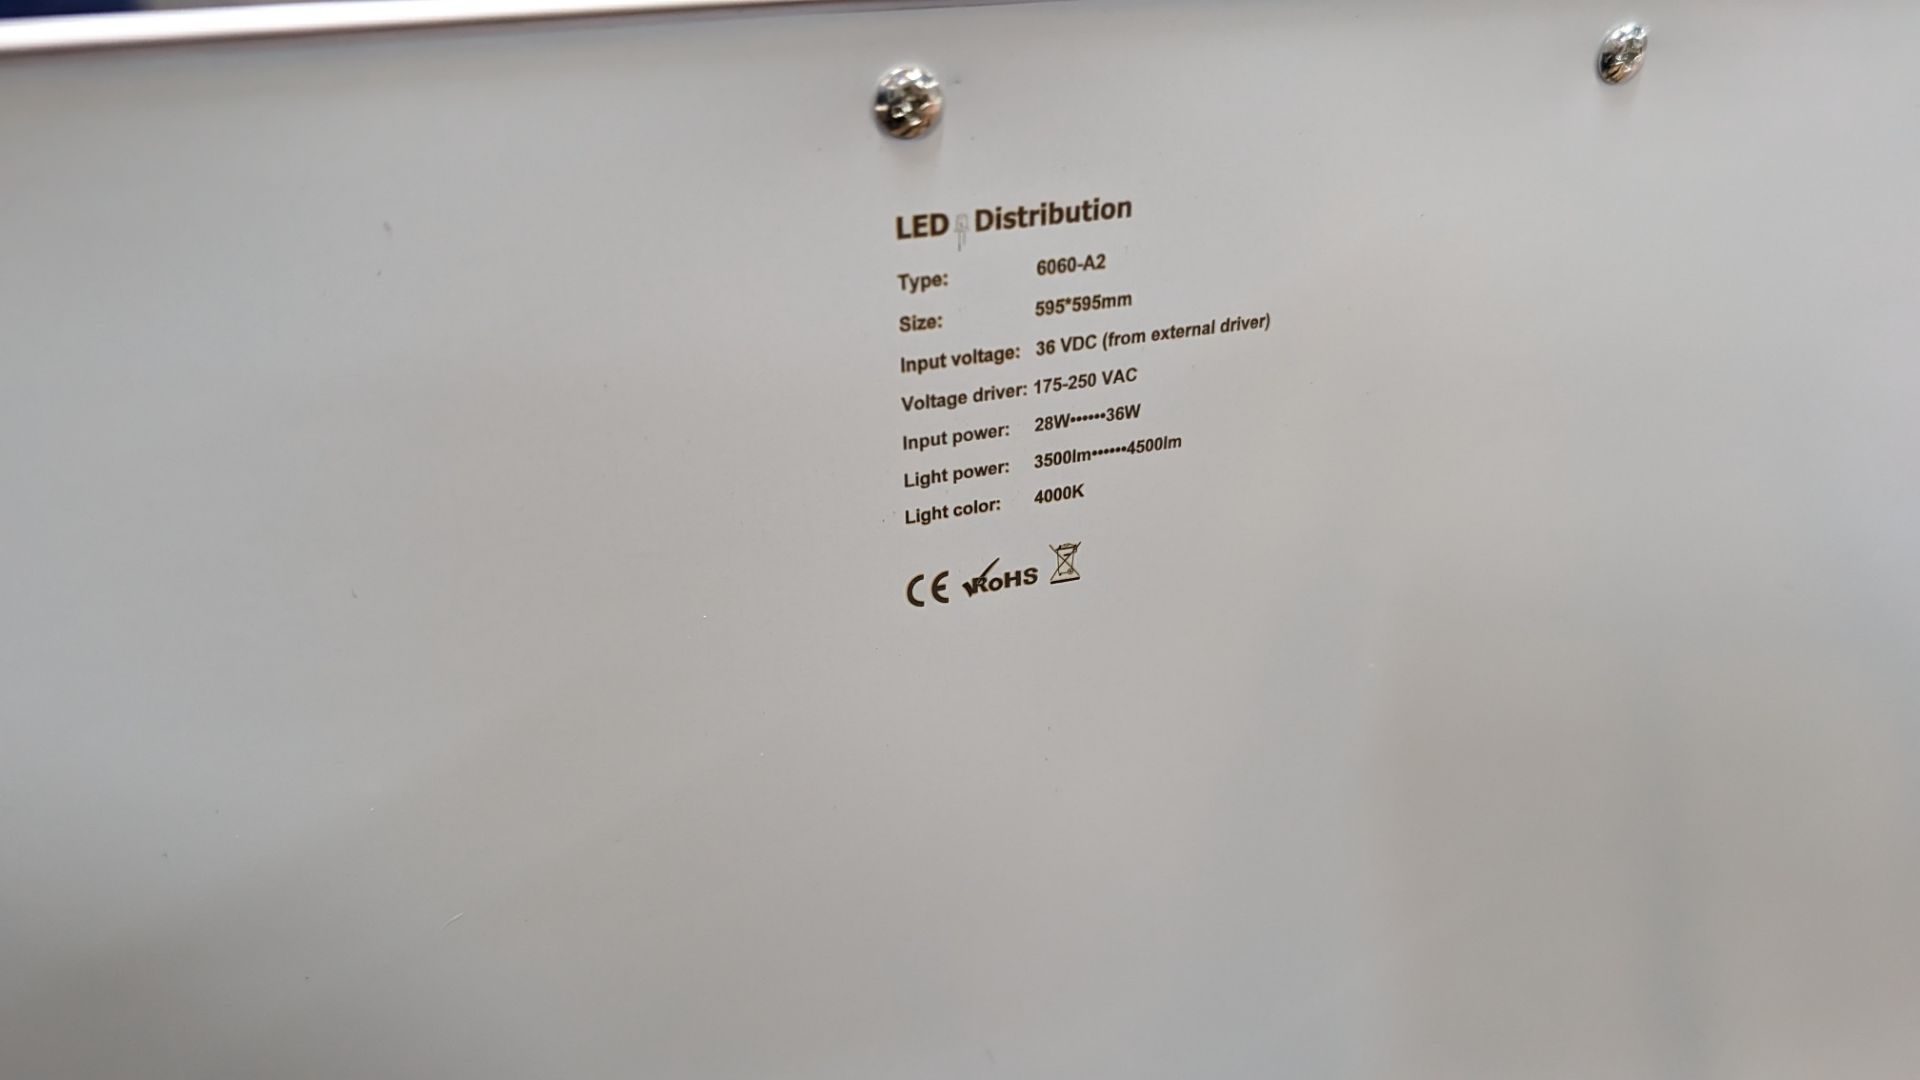 20 off Elegance Premium Eco 595mm x 595mm LED lighting panels. 4000k. 28/36w input power. 36w dri - Bild 10 aus 14